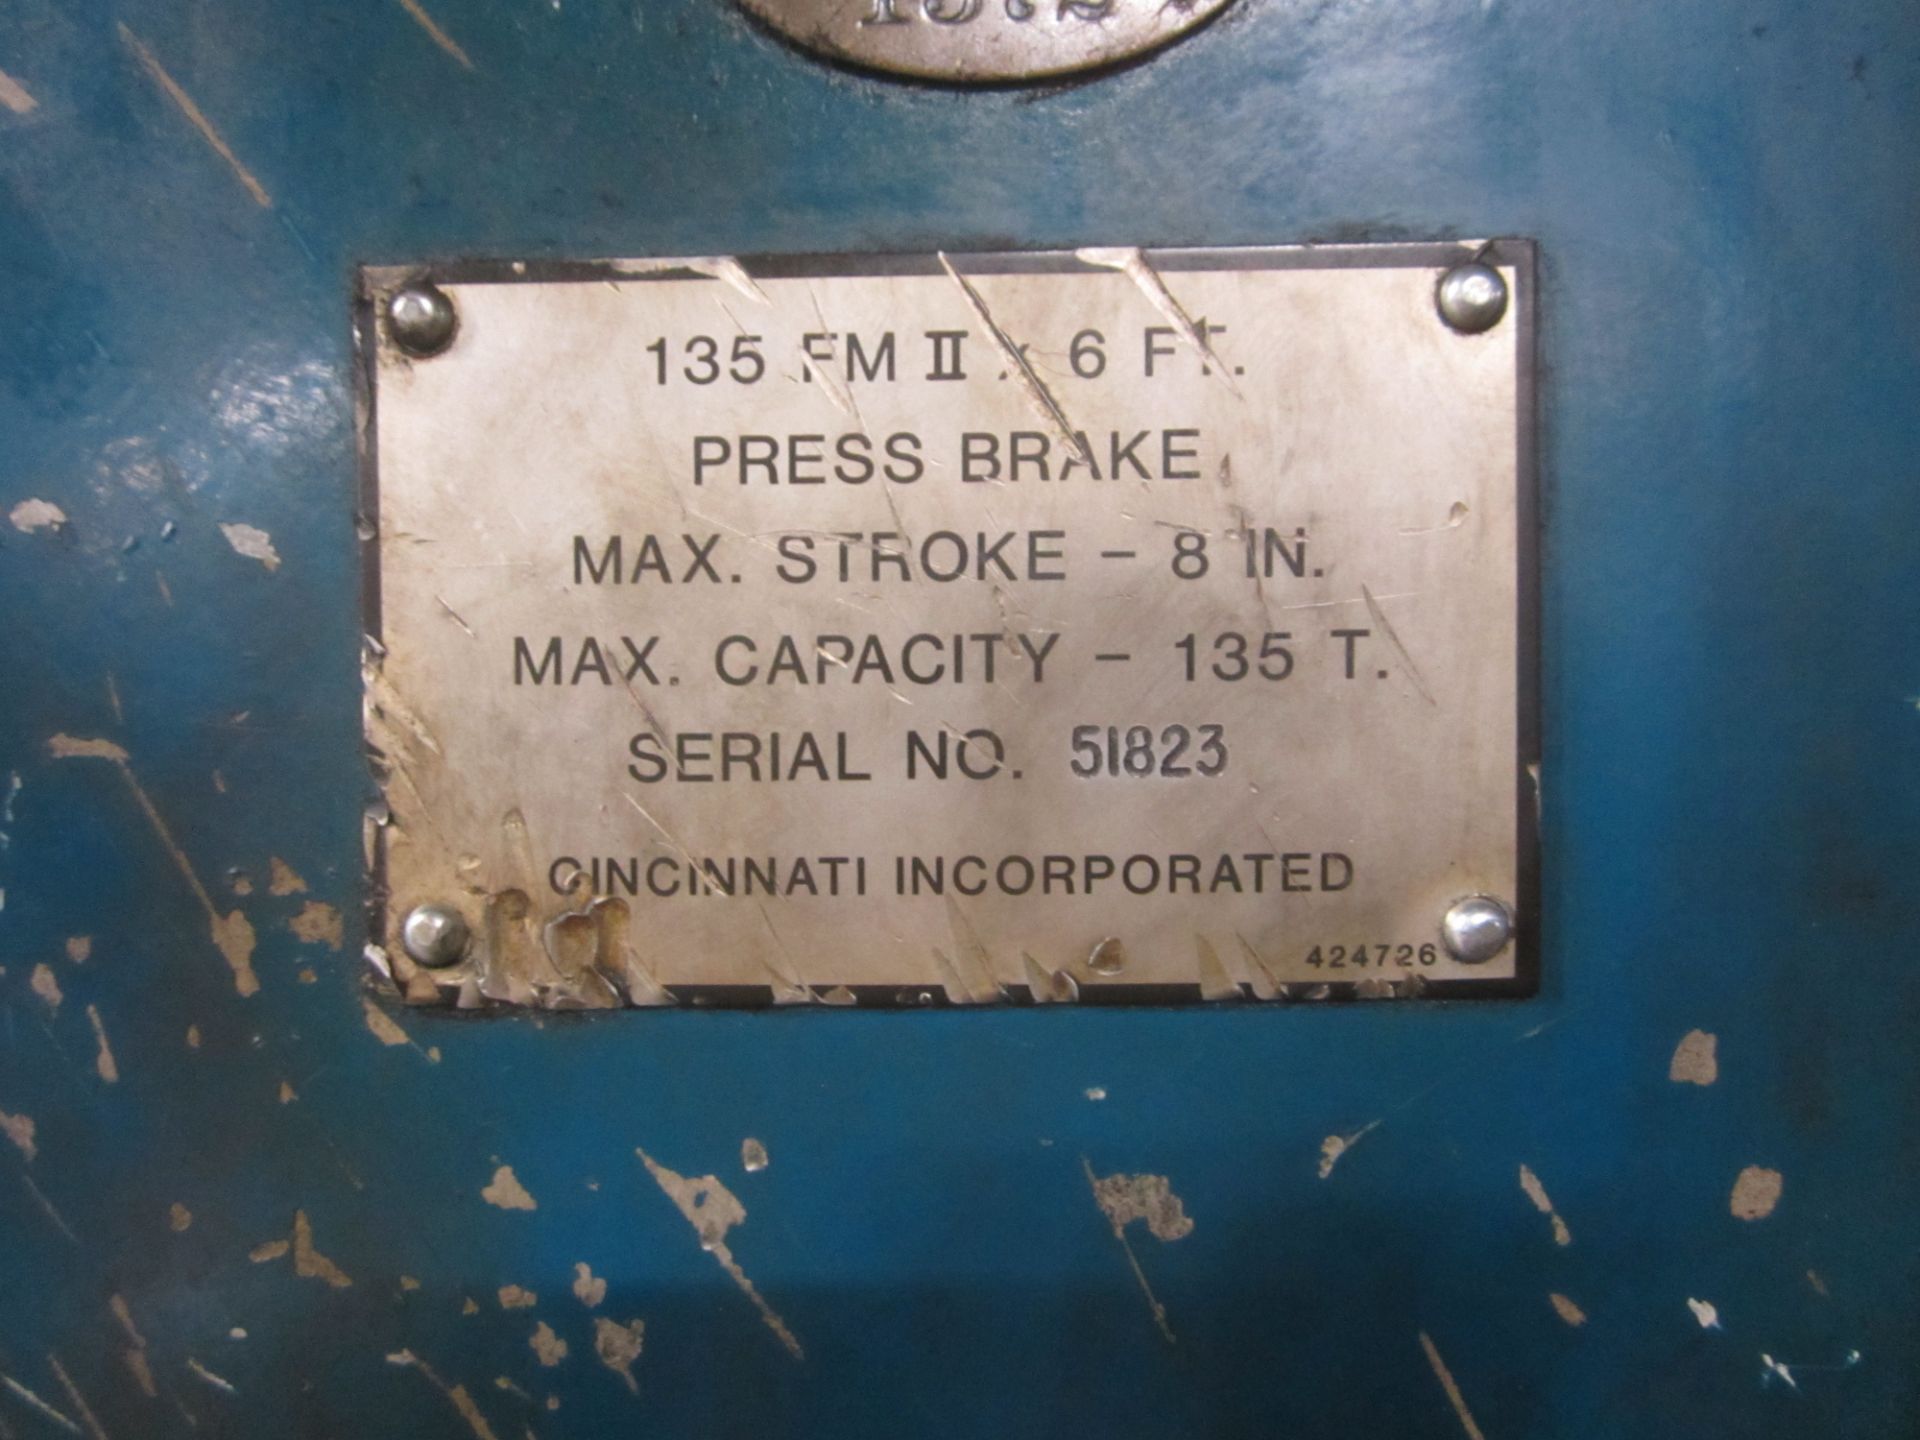 Cincinnati Model 135FM II X 6 Hydraulic Press Brake, s/n 51823, Cincinnati Form Master II, New 2000 - Image 8 of 8